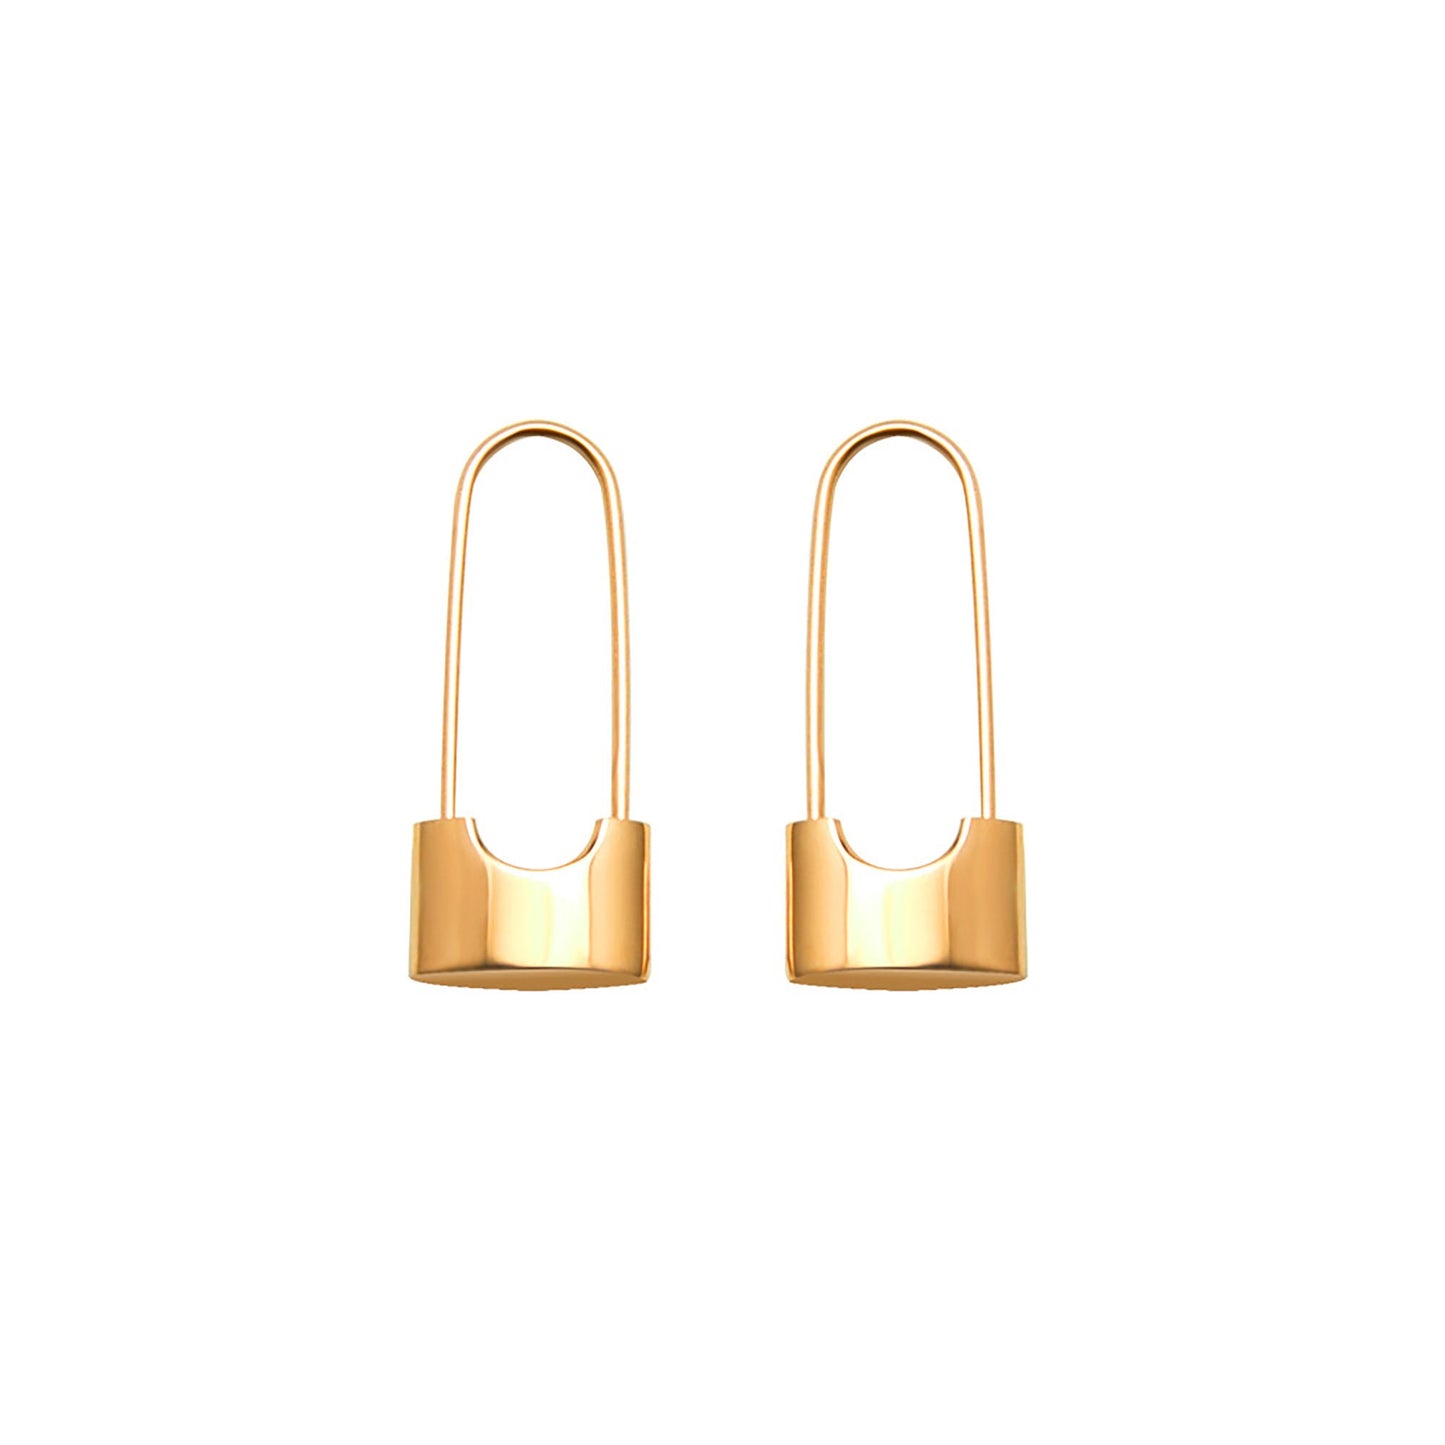 Titanium Lock Hoop Earrings, Gold Plated, Hypoallergenic, Implant Grade Titanium Waterproof, Vintage Style, Minimal